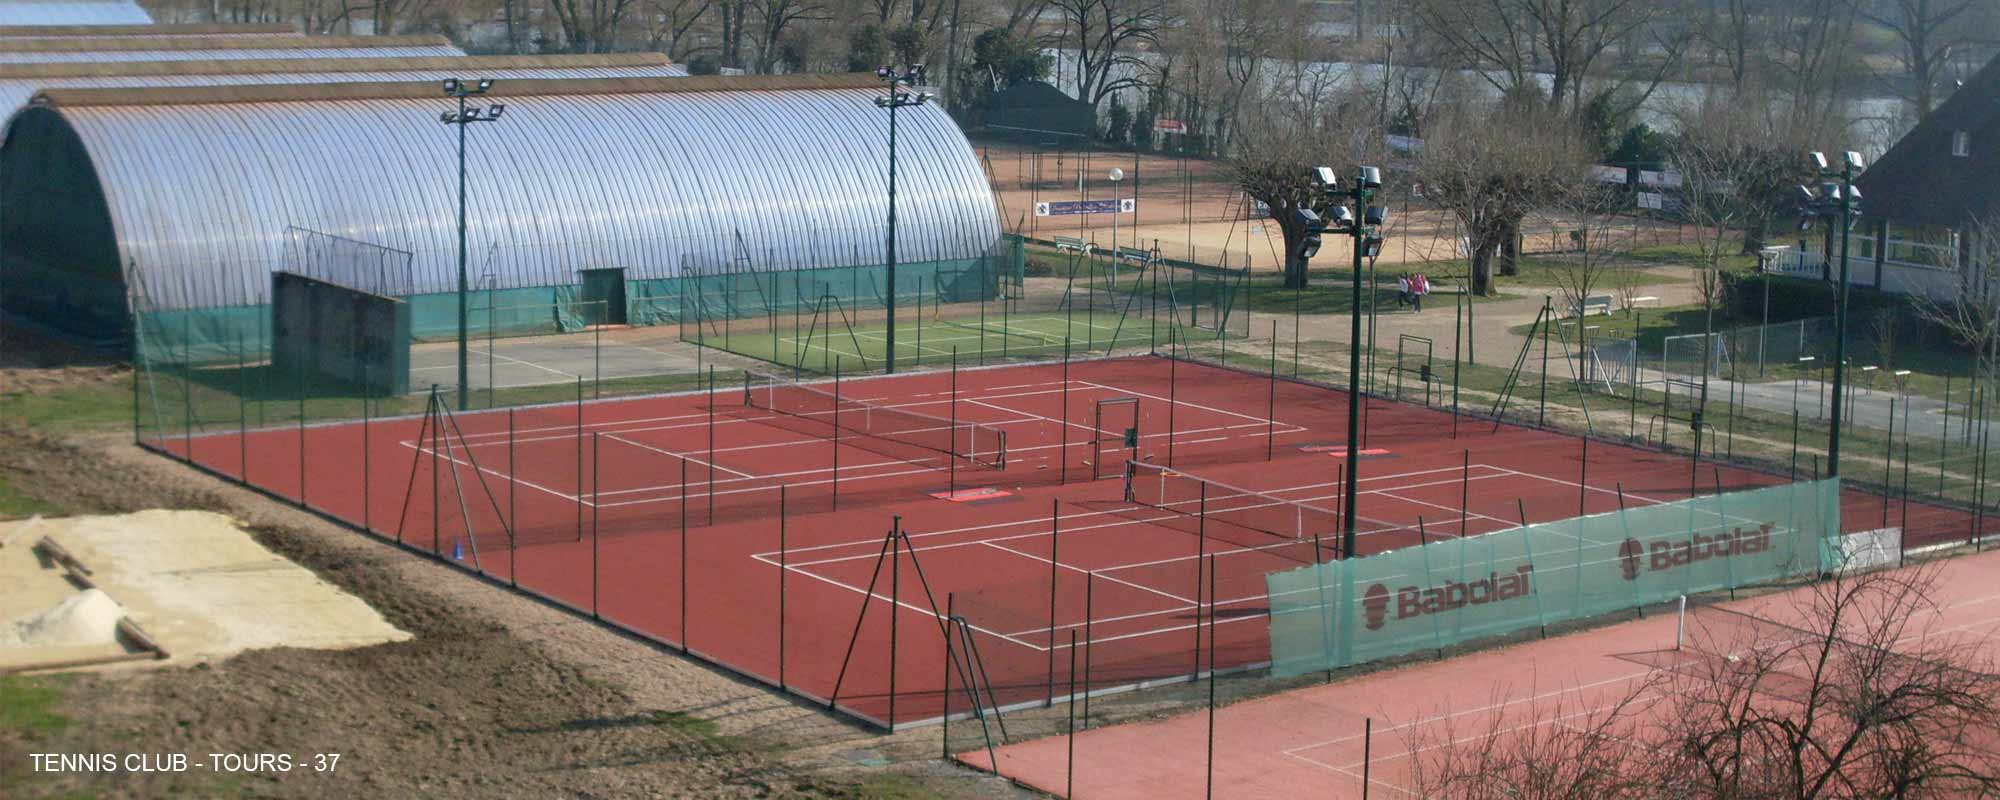 Tennis Club Tours - 37